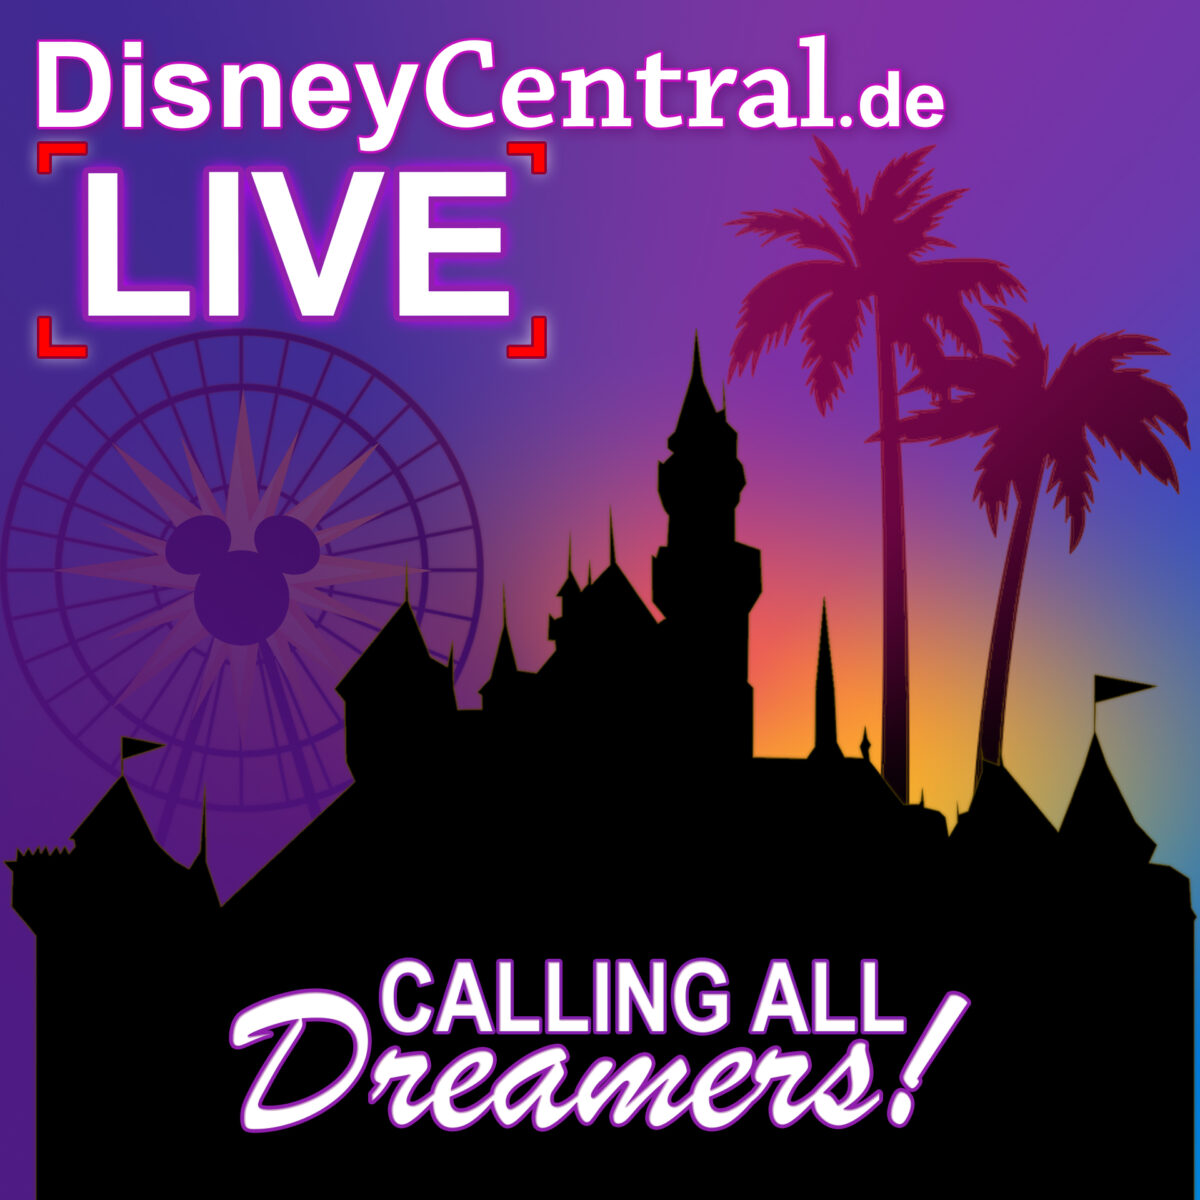 Deutscher Disney Podcast: DisneyCentral.de LIVE: Calling all Dreamers!